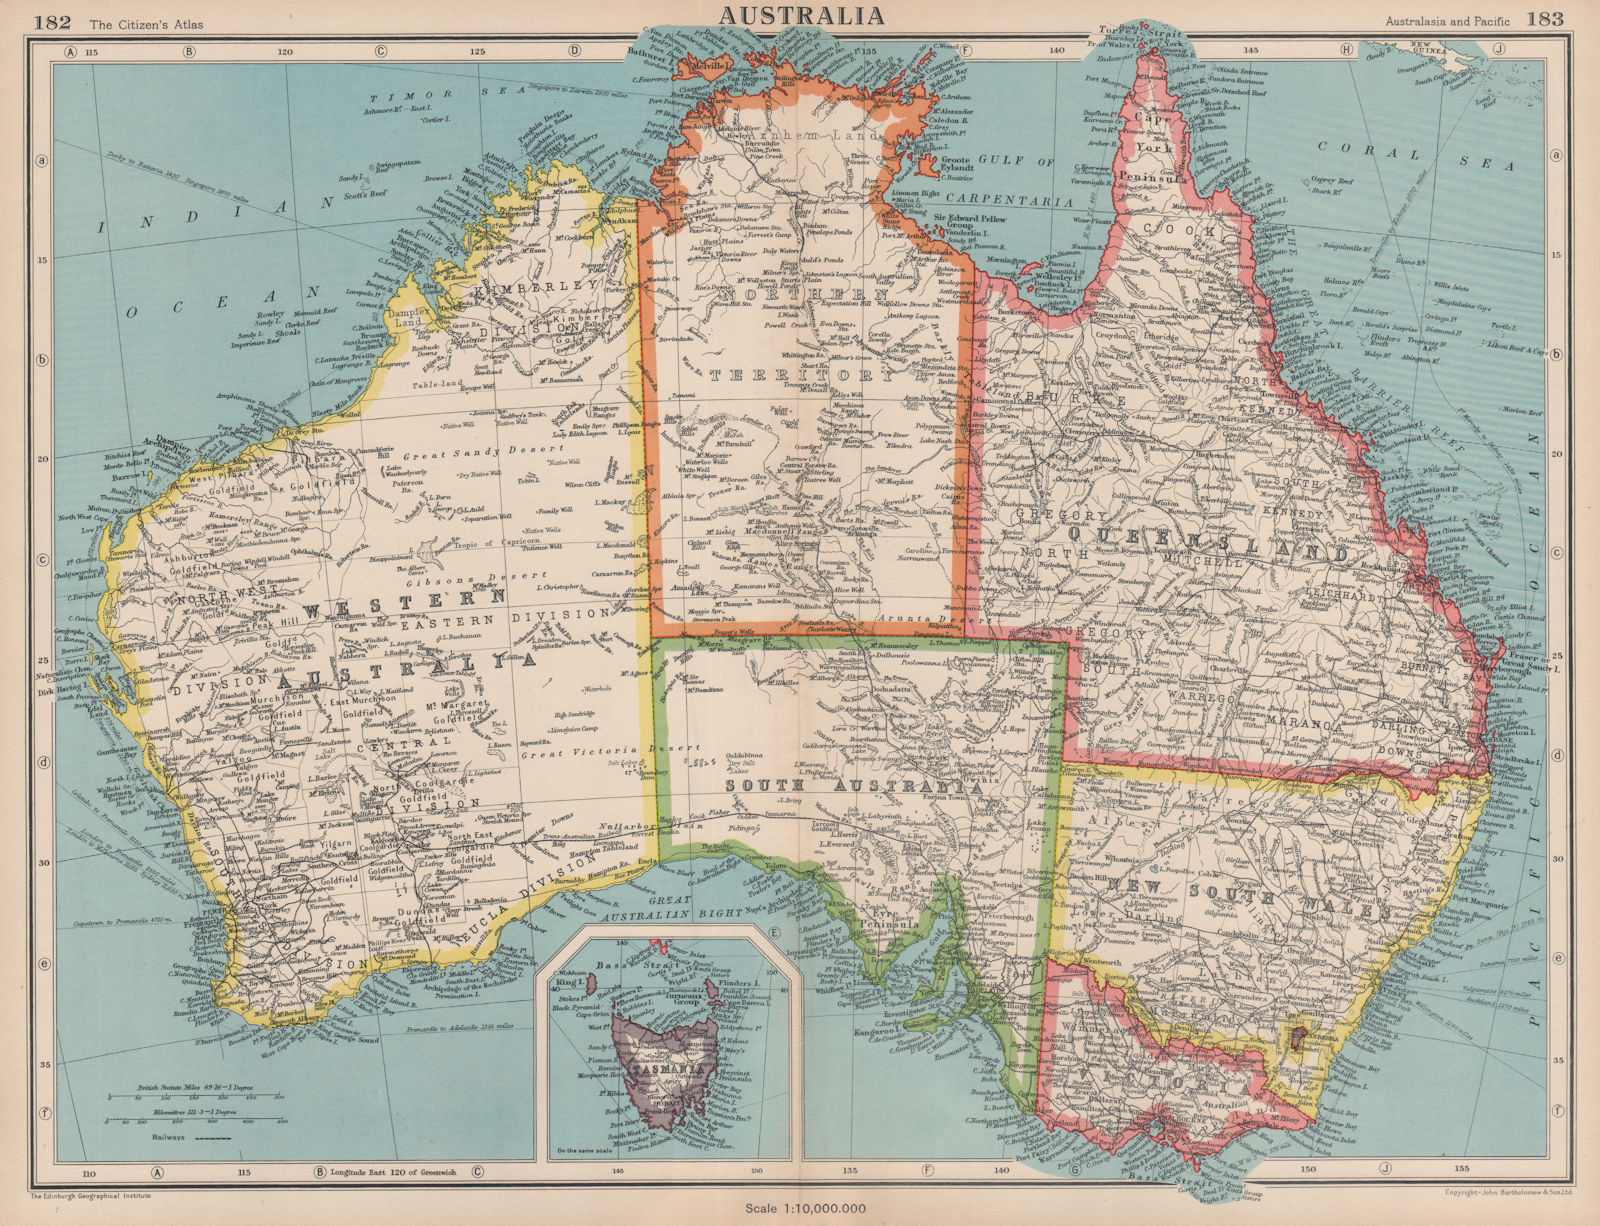 Associate Product AUSTRALIA. Showing states and railways. BARTHOLOMEW 1944 old vintage map chart